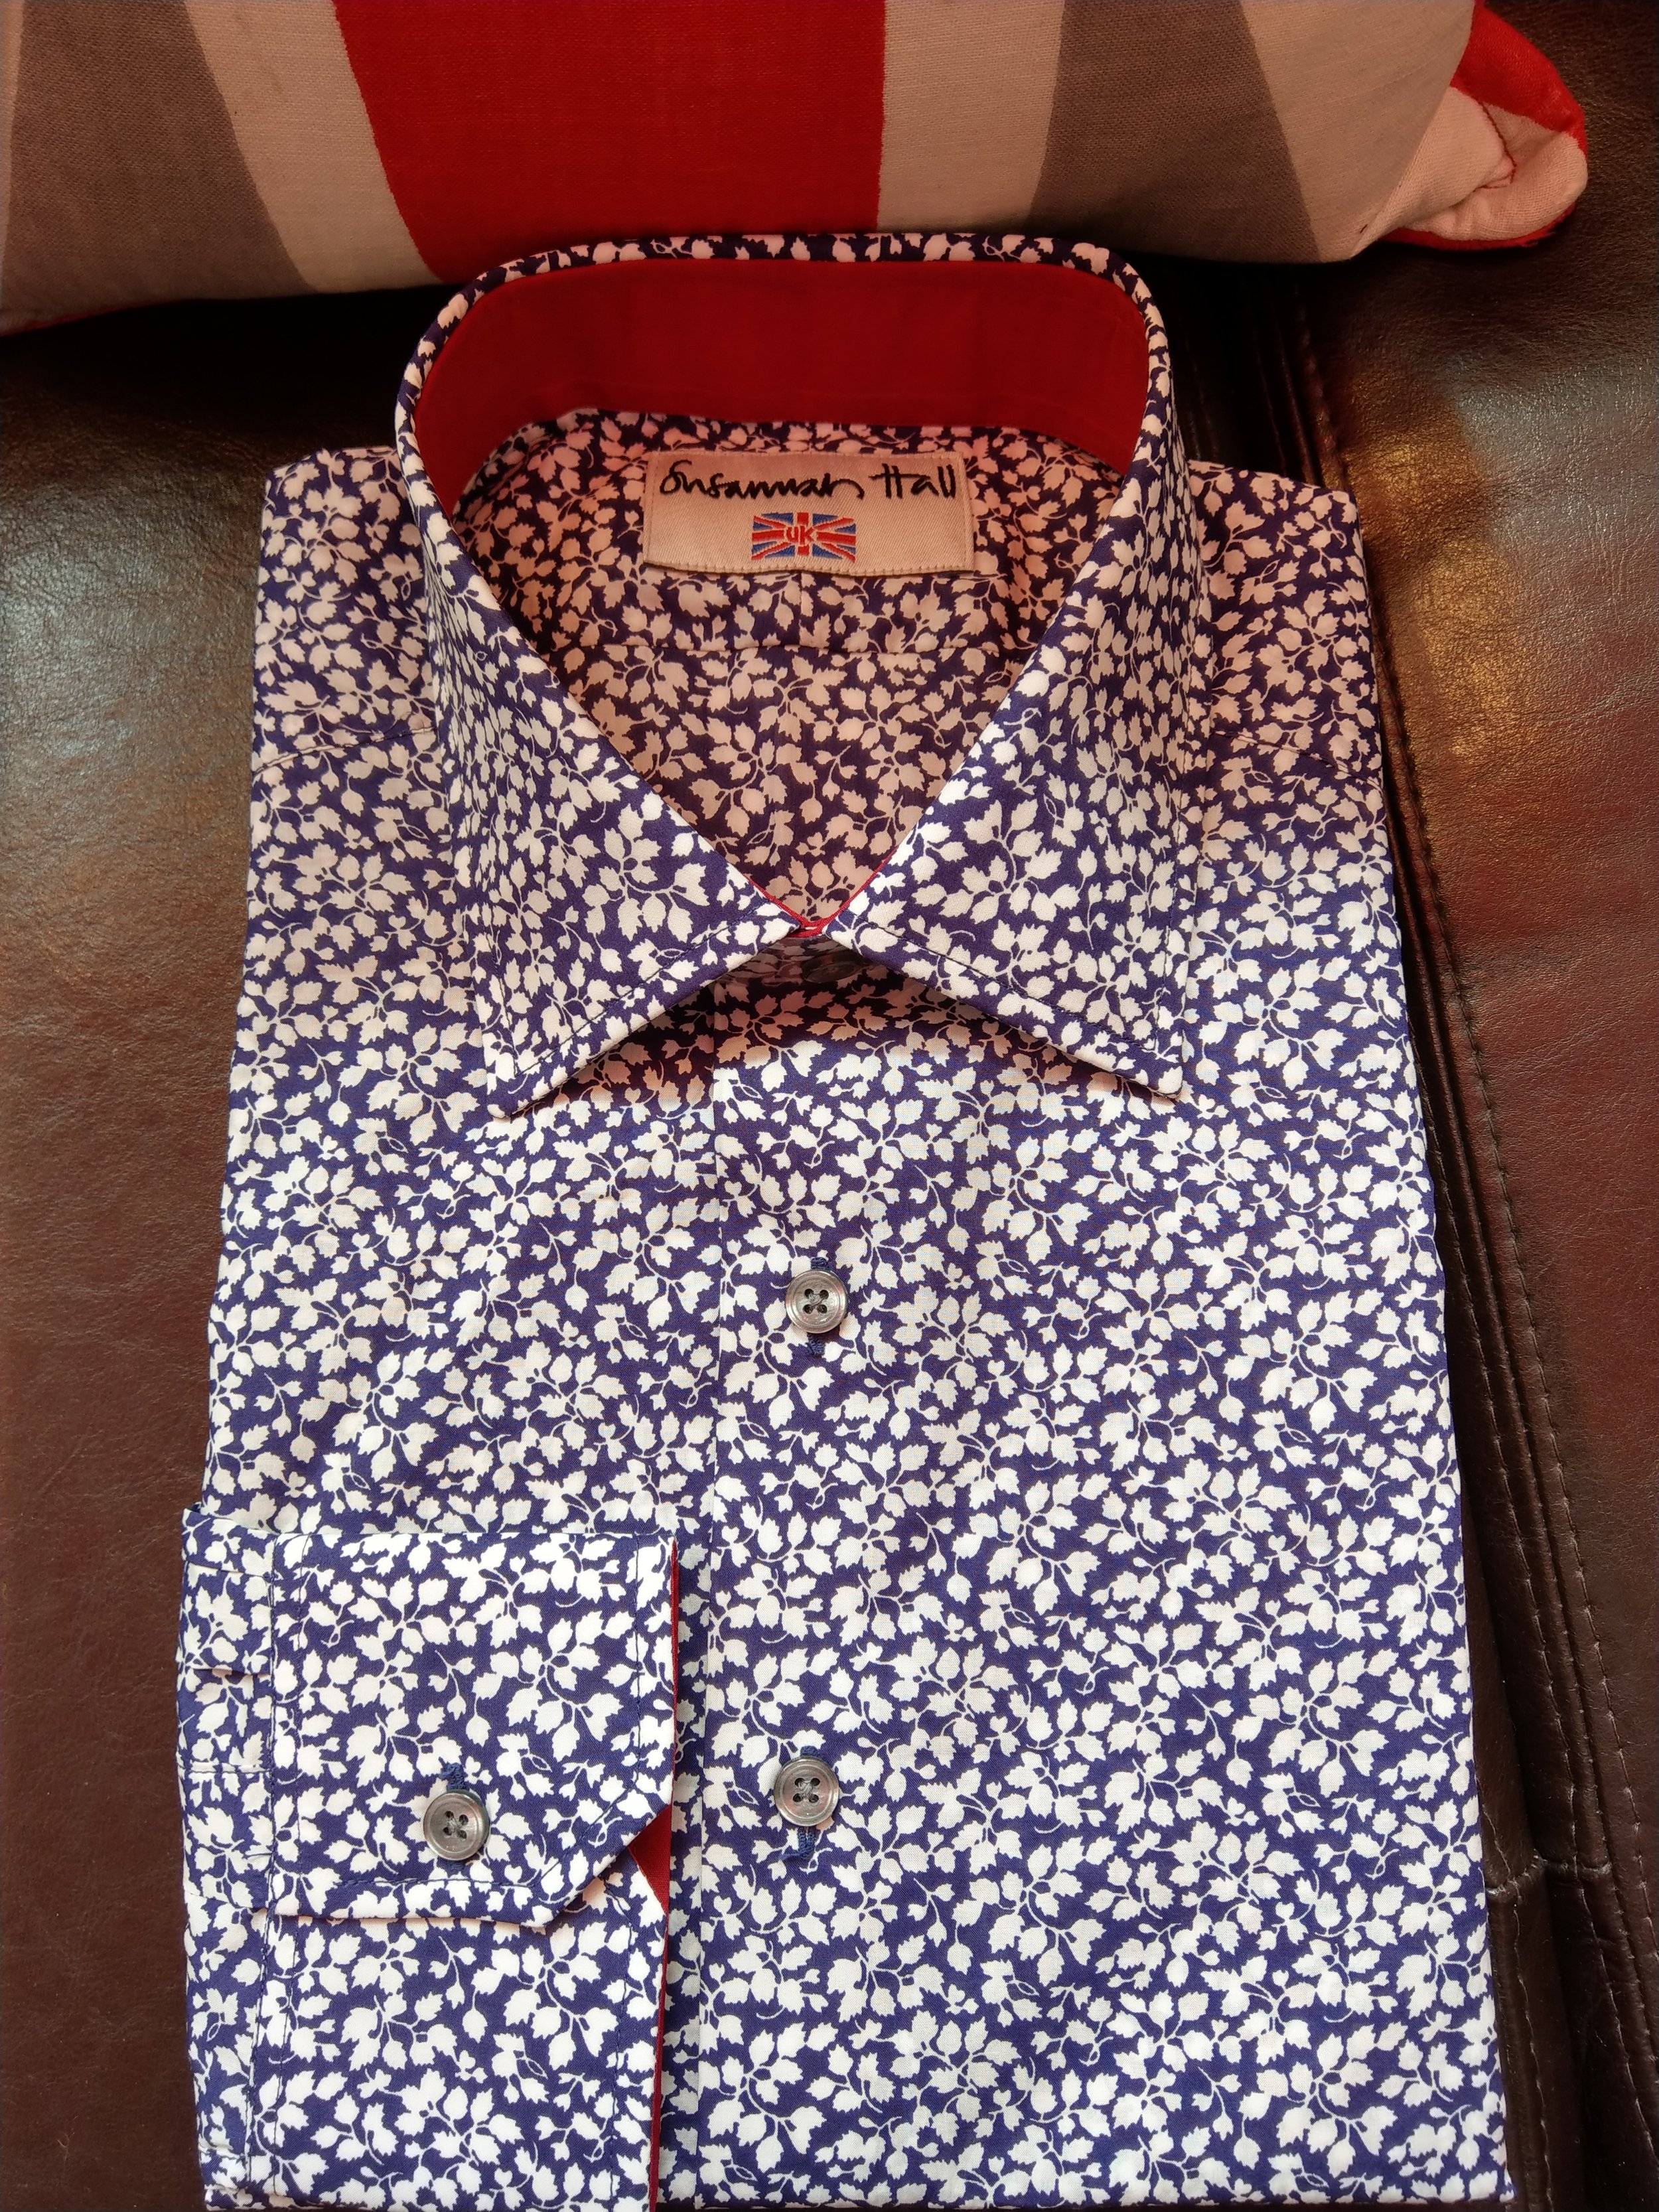 floral-bespoke-pattern-casual-shirt-detail-susannah-hall-tailors-made-uk-britain.jpg